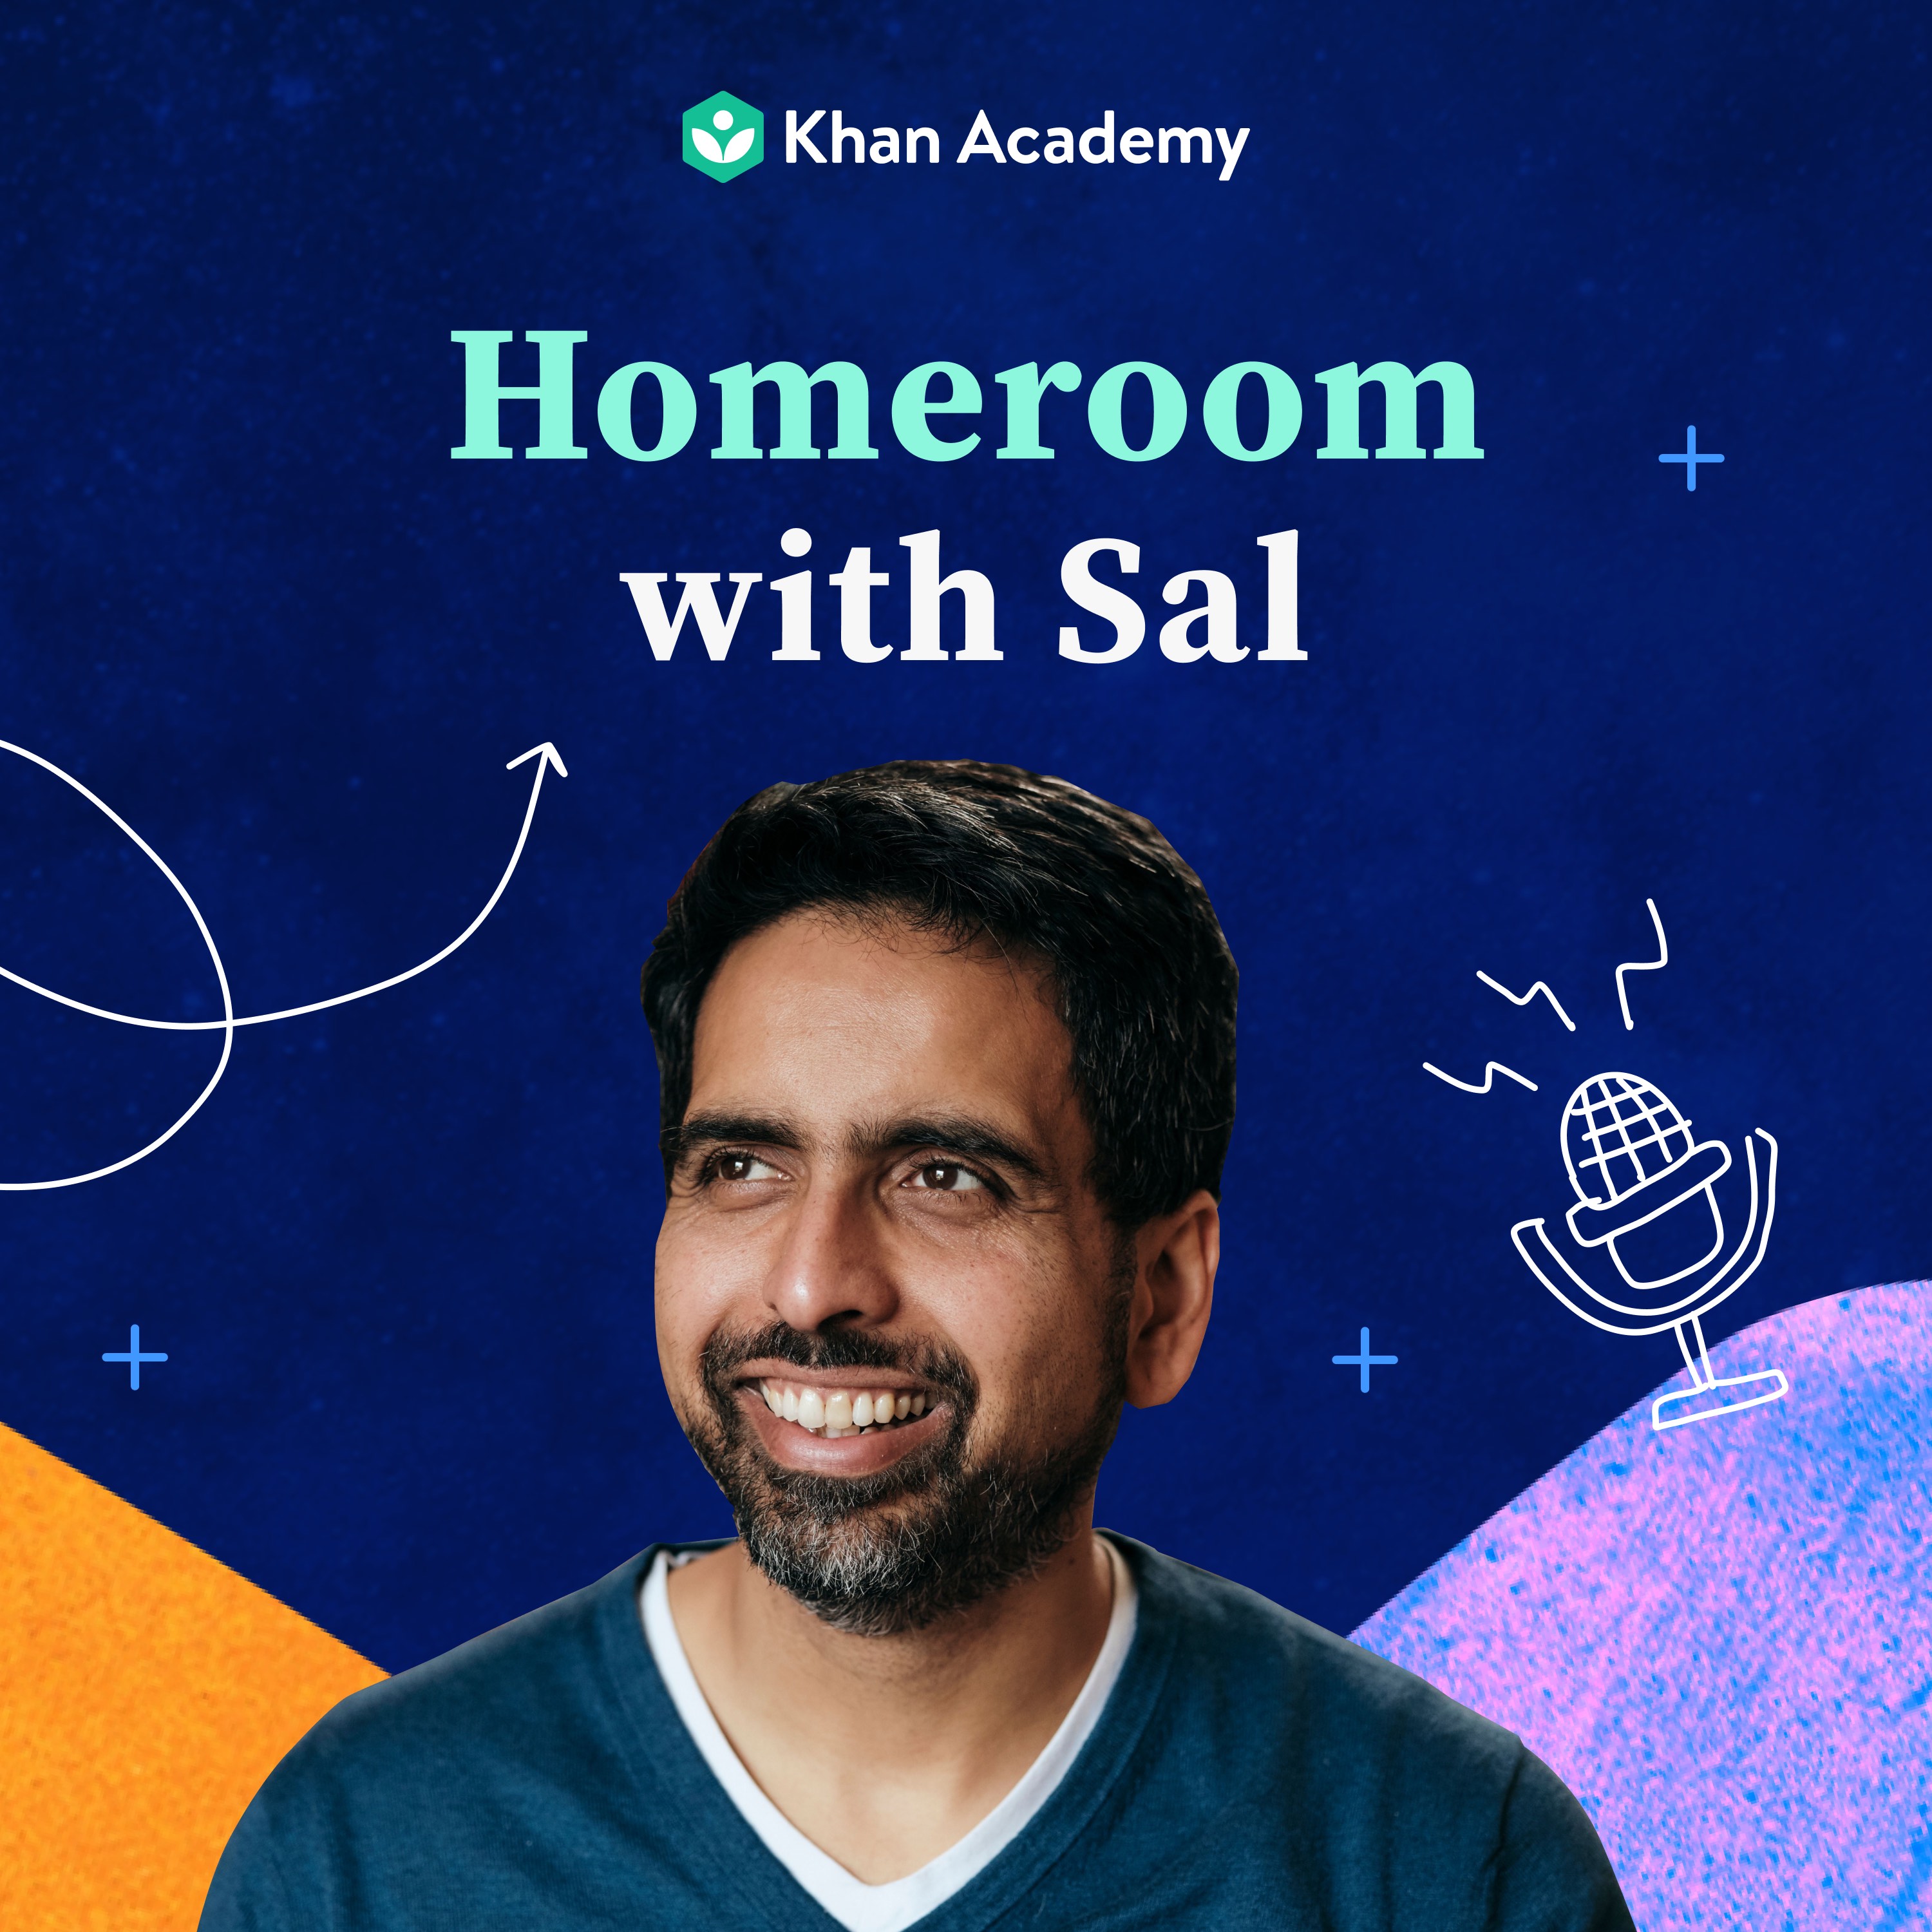 Homeroom with Sal Khan